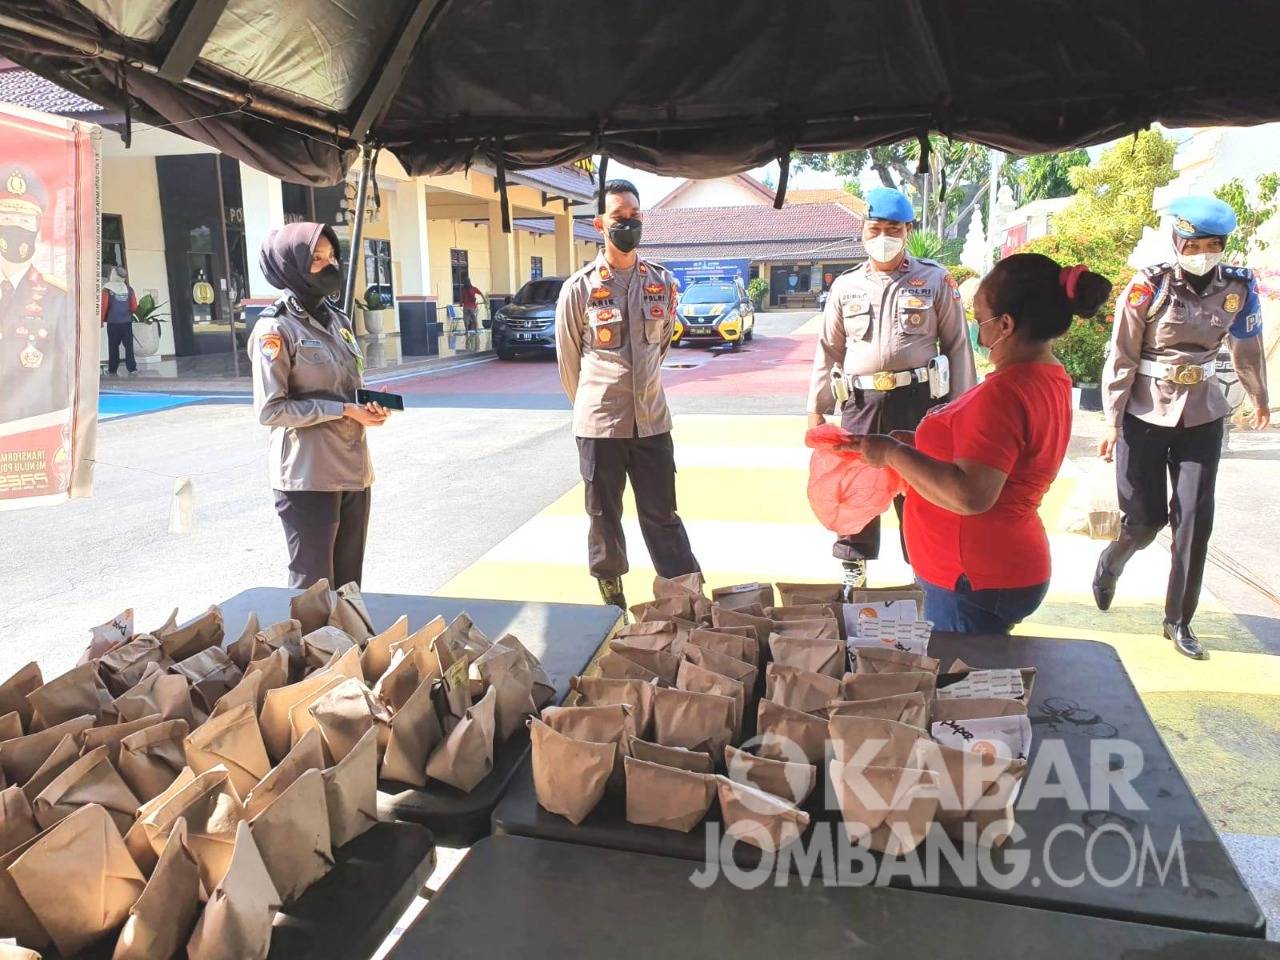 olres Jombang membagikan ratusan nasi bungkus 'Jumat Berkat'